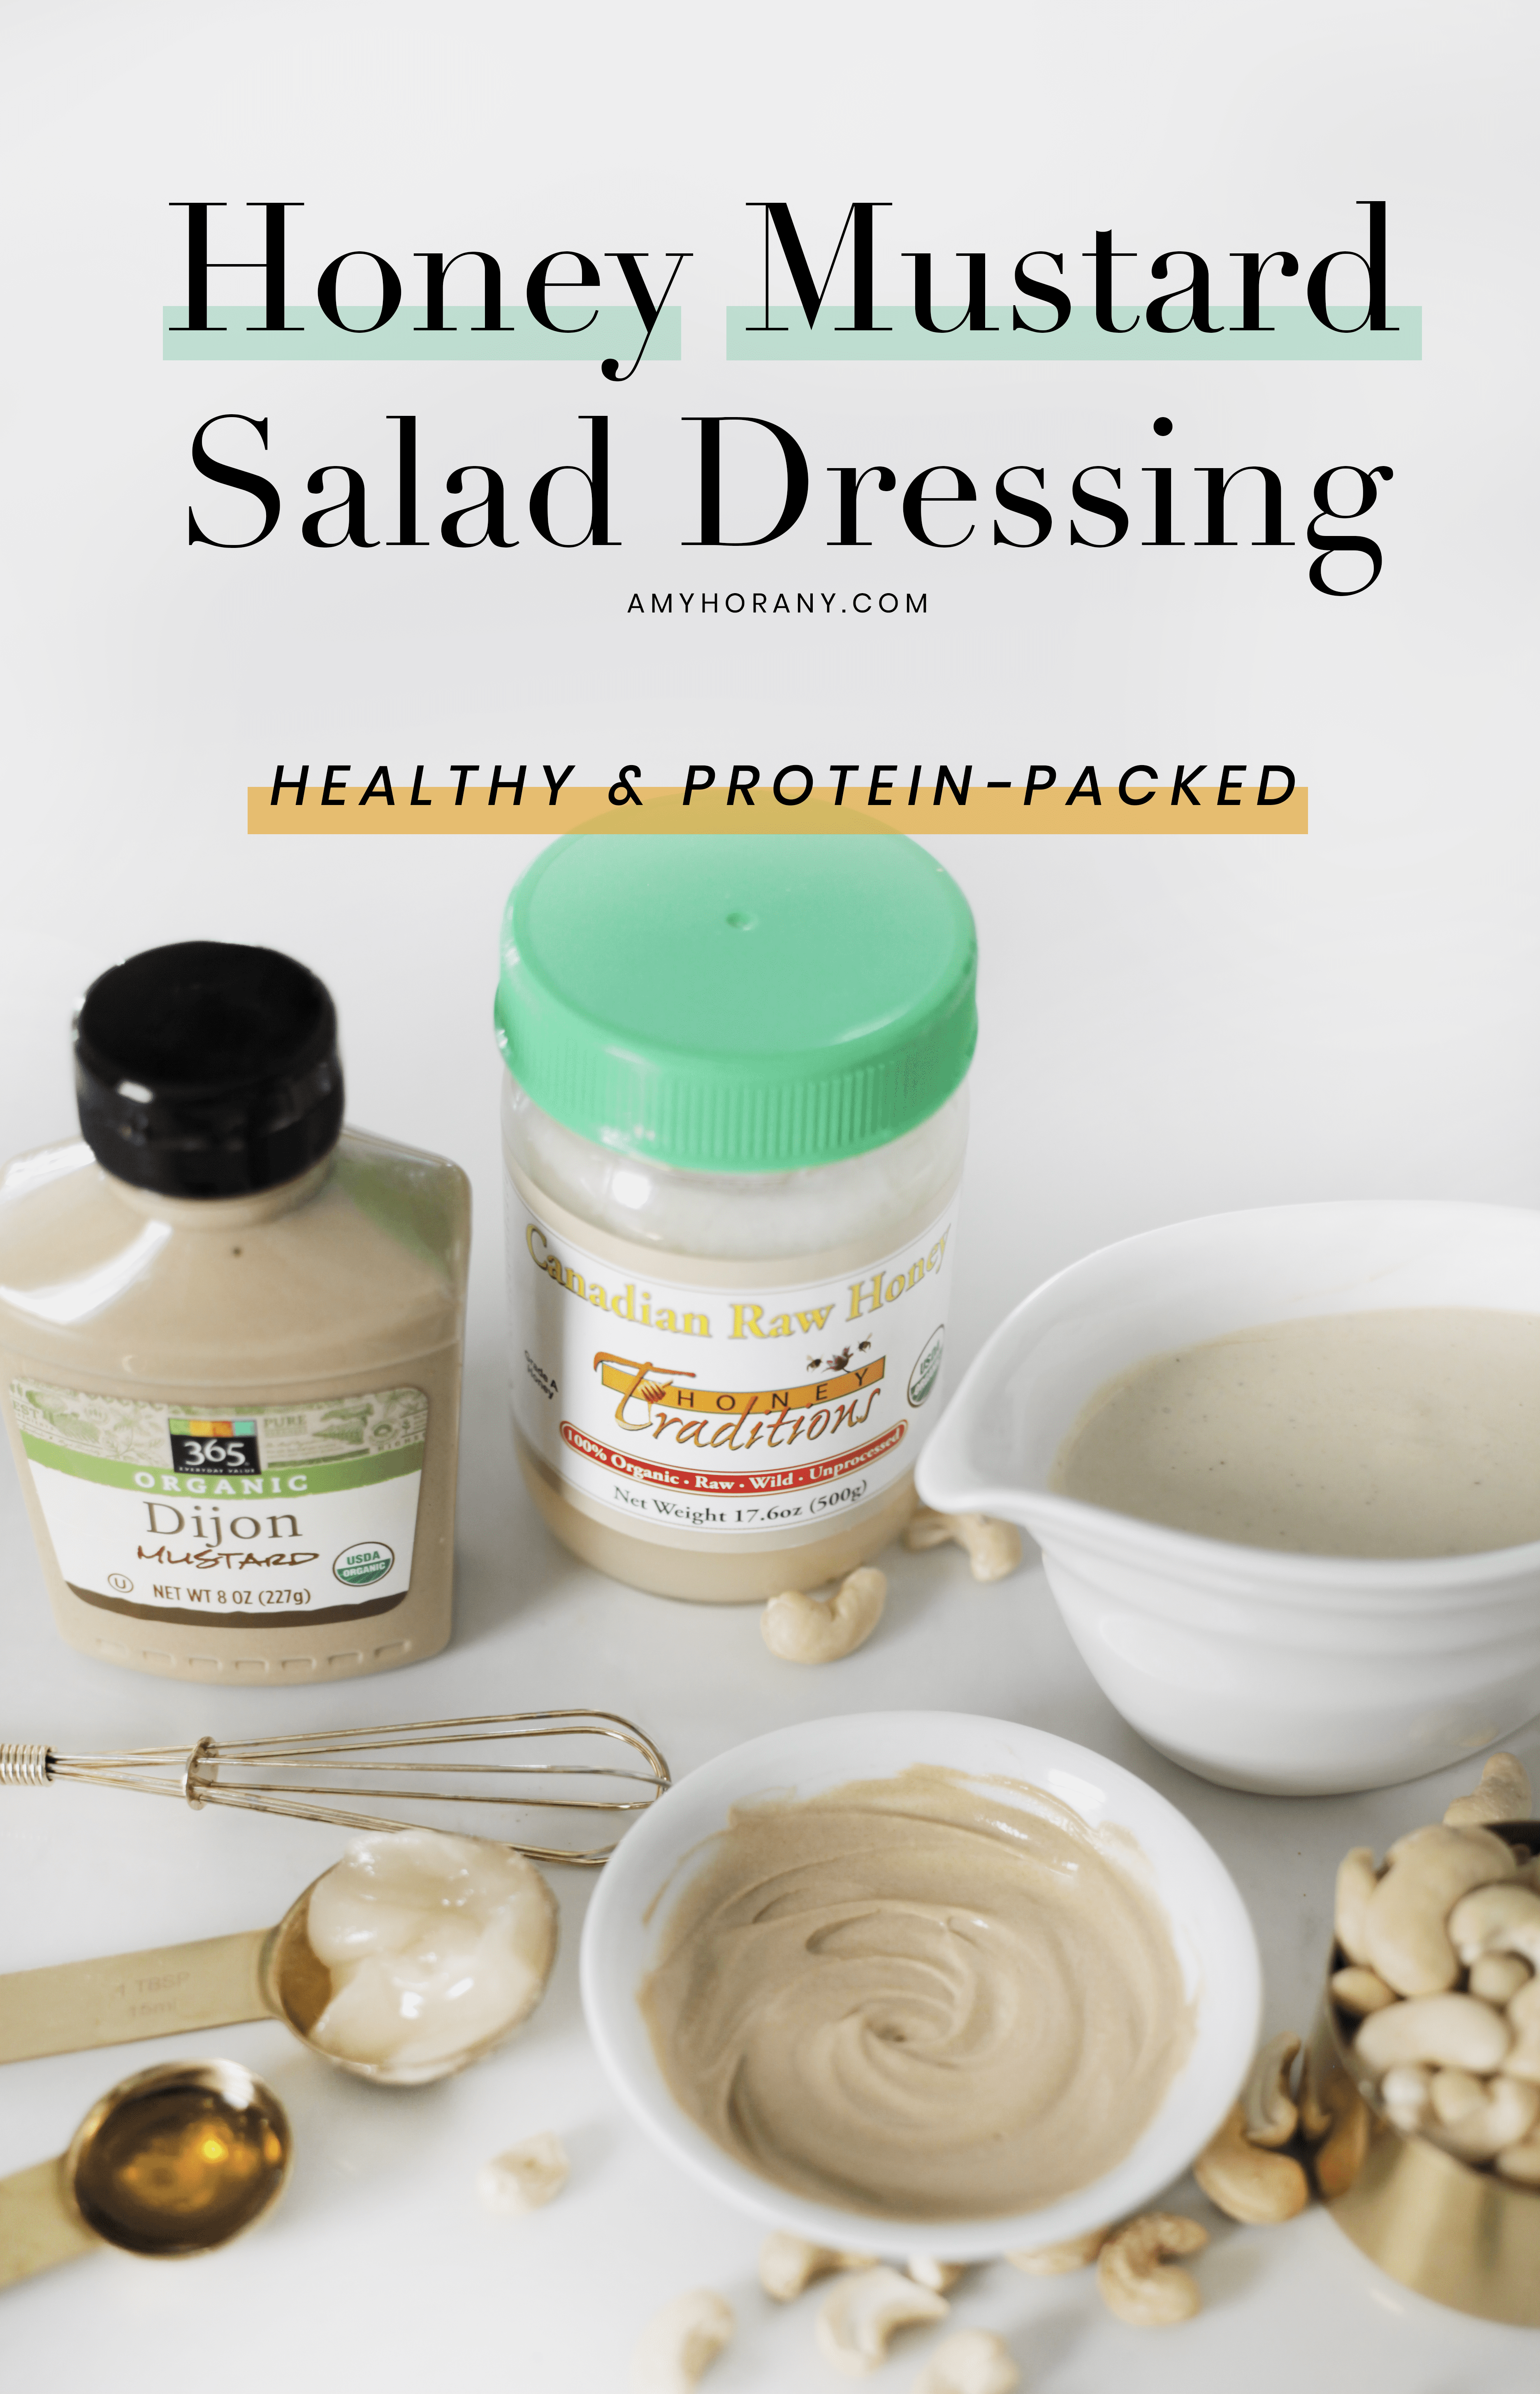 Honey Mustard salad dressing, healthy salad dressing, cashews